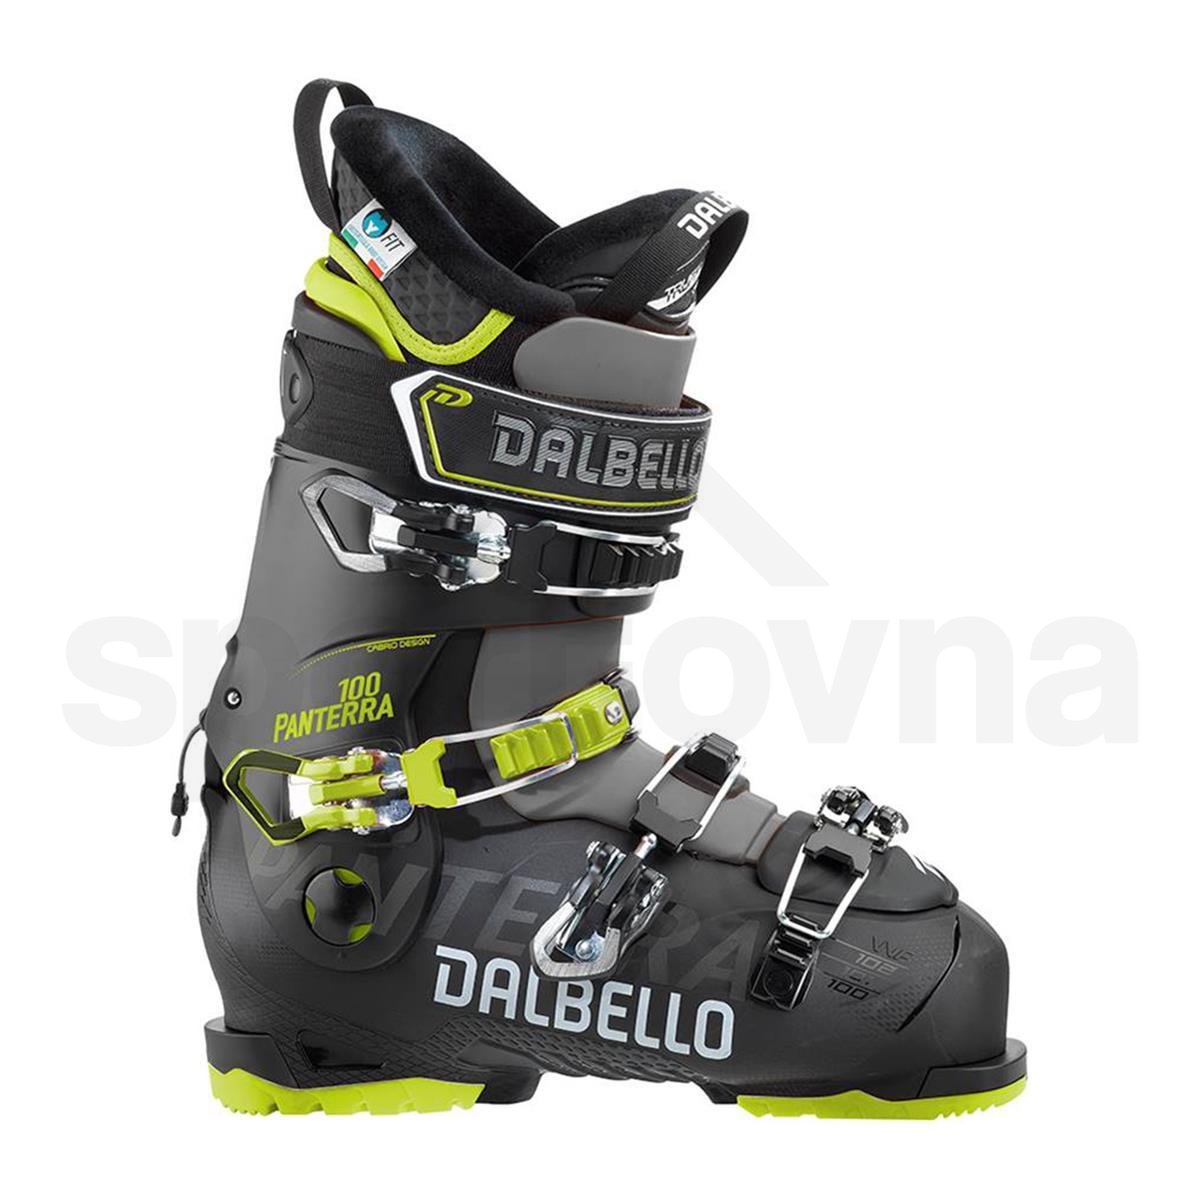 Lyžařské boty Dalbello Panterra 100 - černá/žlutá